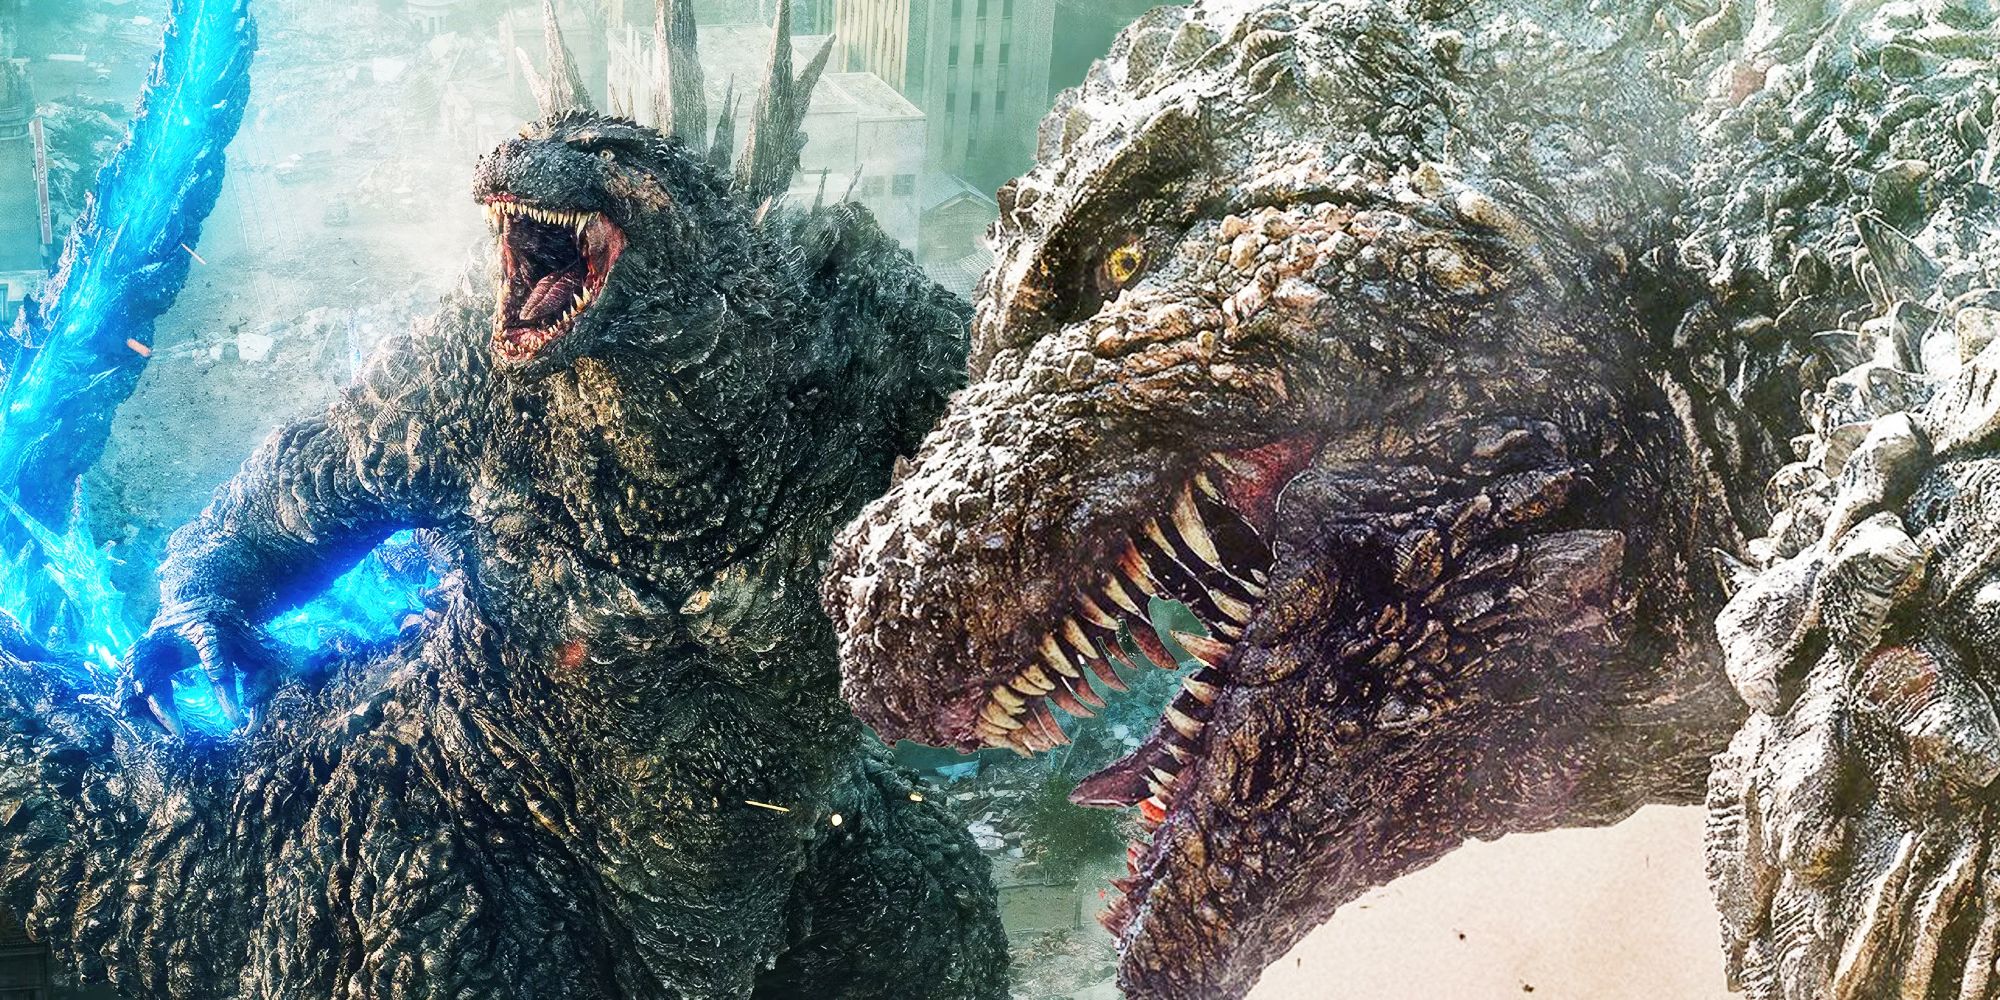 Godzilla Minus One Gets A Satirical American Take With A Giant Gun In Art